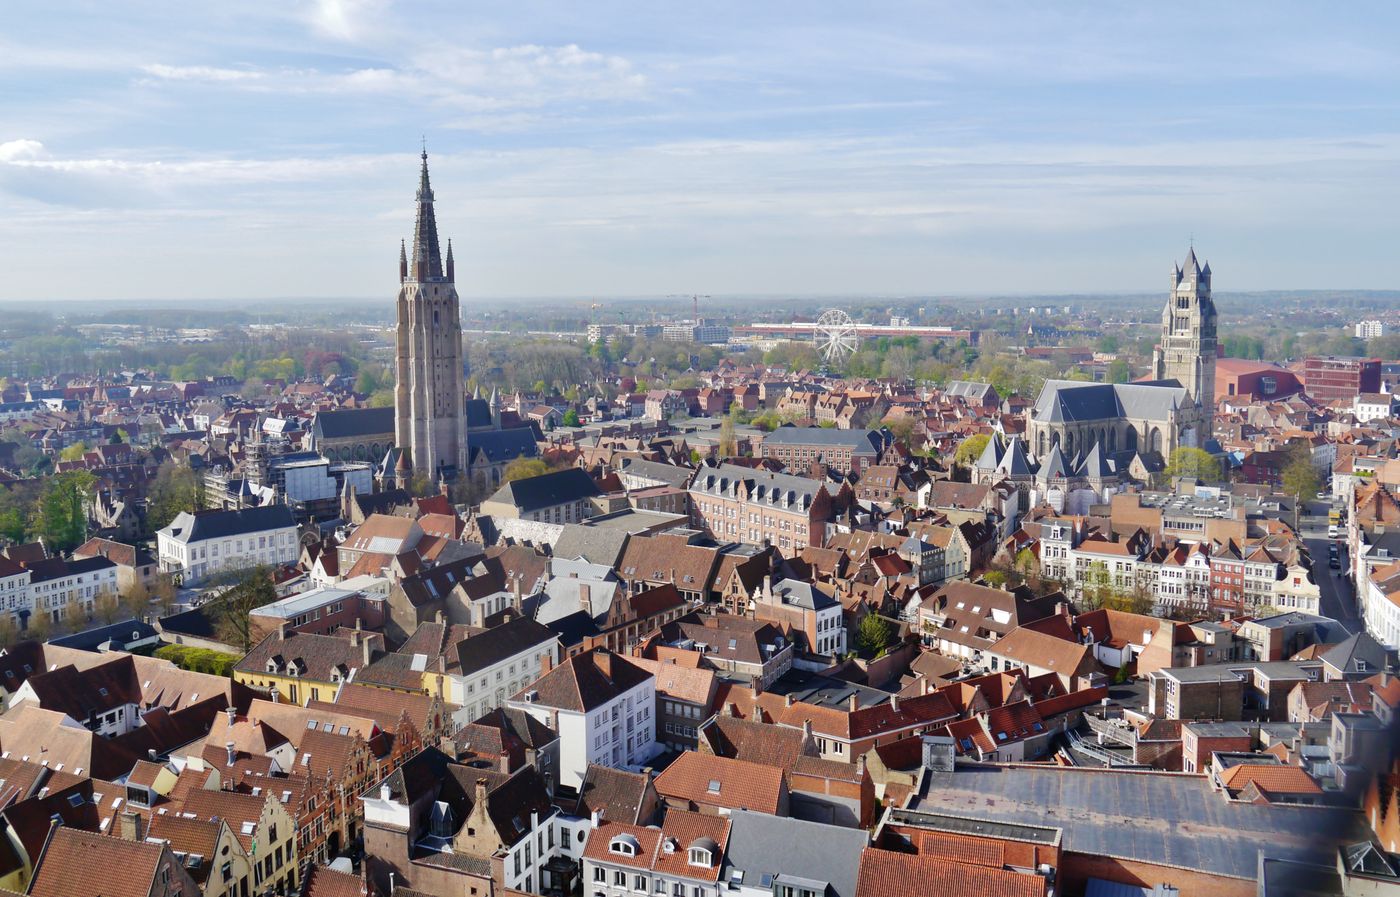 Brugge